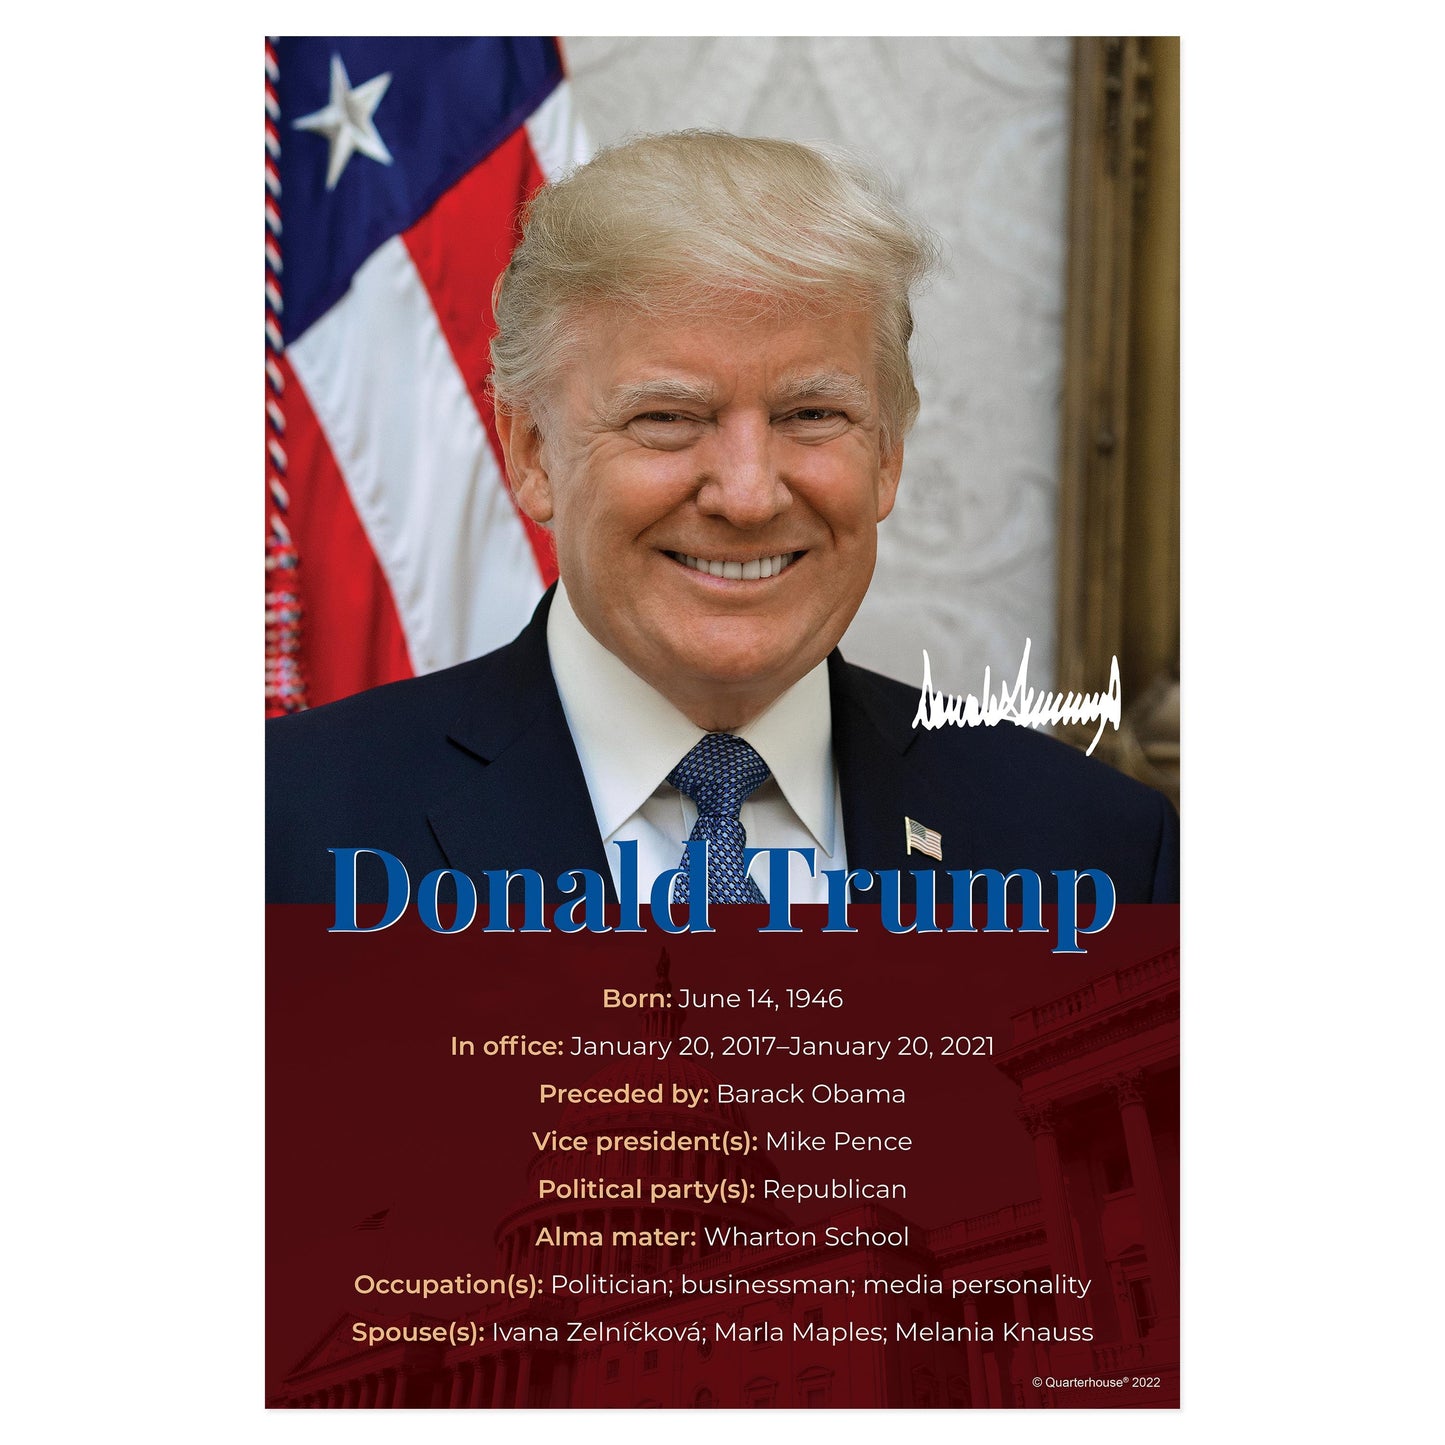 Quarterhouse President Donald Trump Biographical Poster, Social Studies Classroom Materials for Teachers